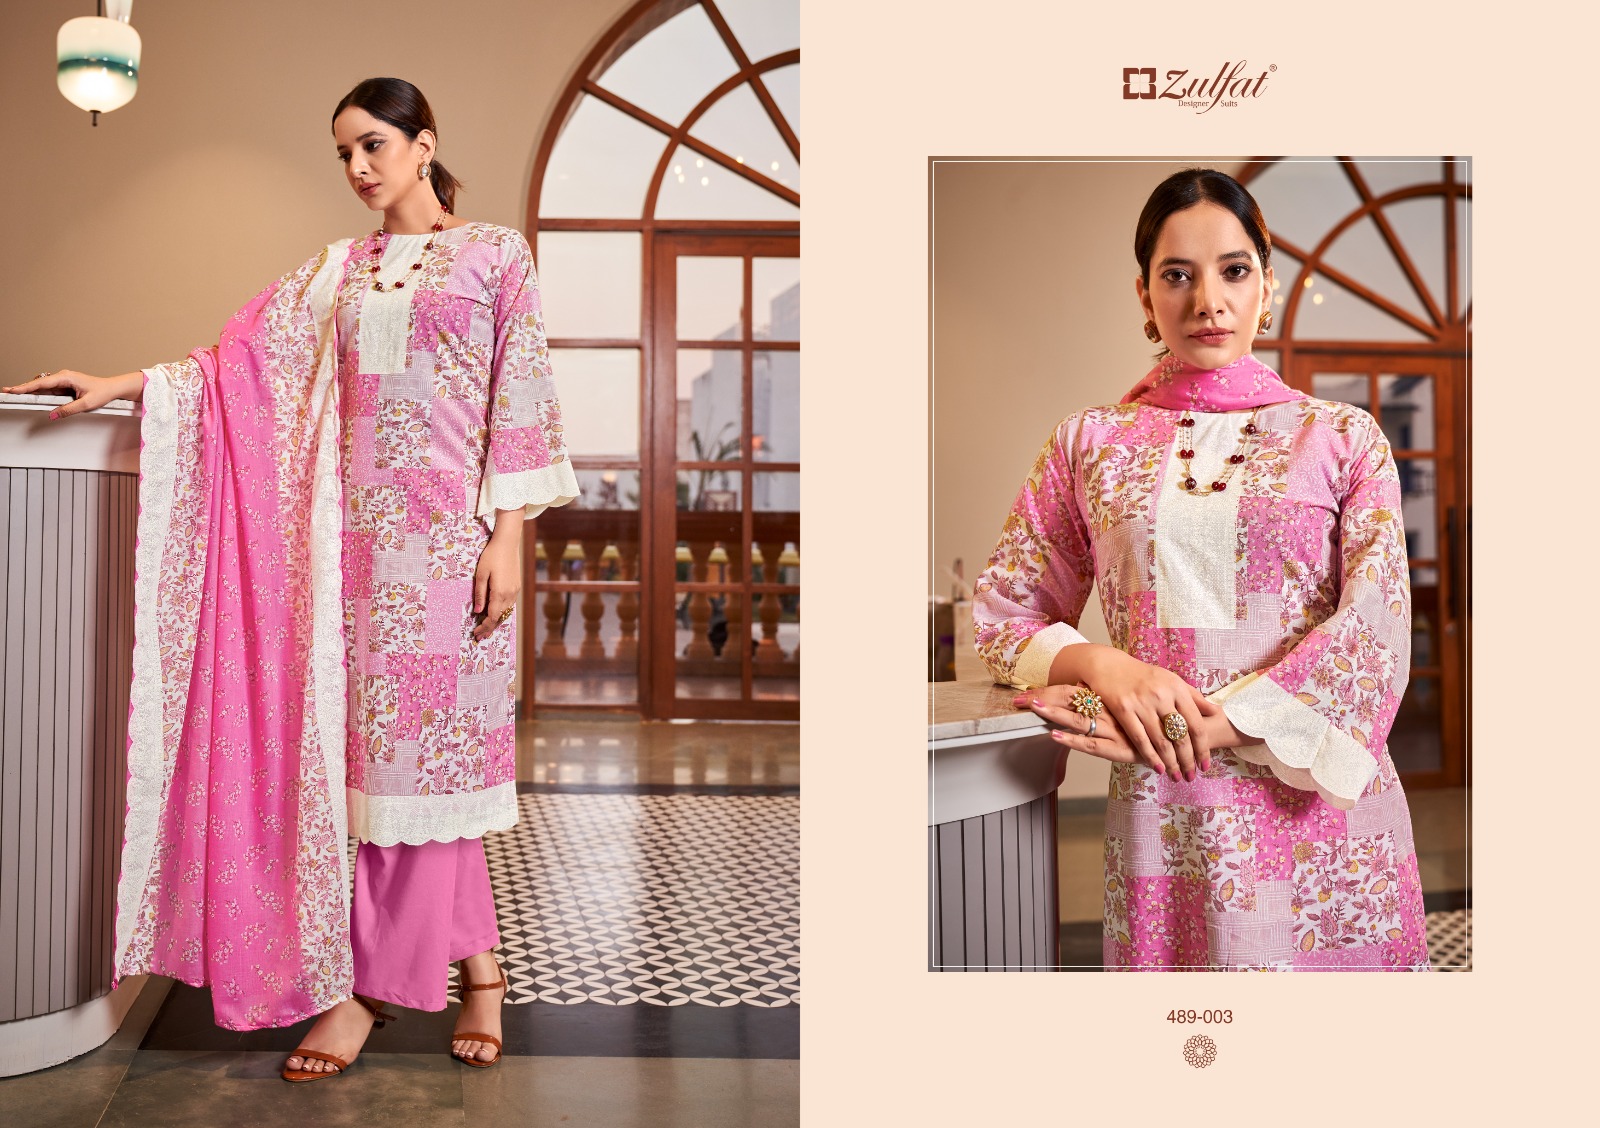 zulfat designer suits afsana 2 cotton catchy look salwar suit catalog